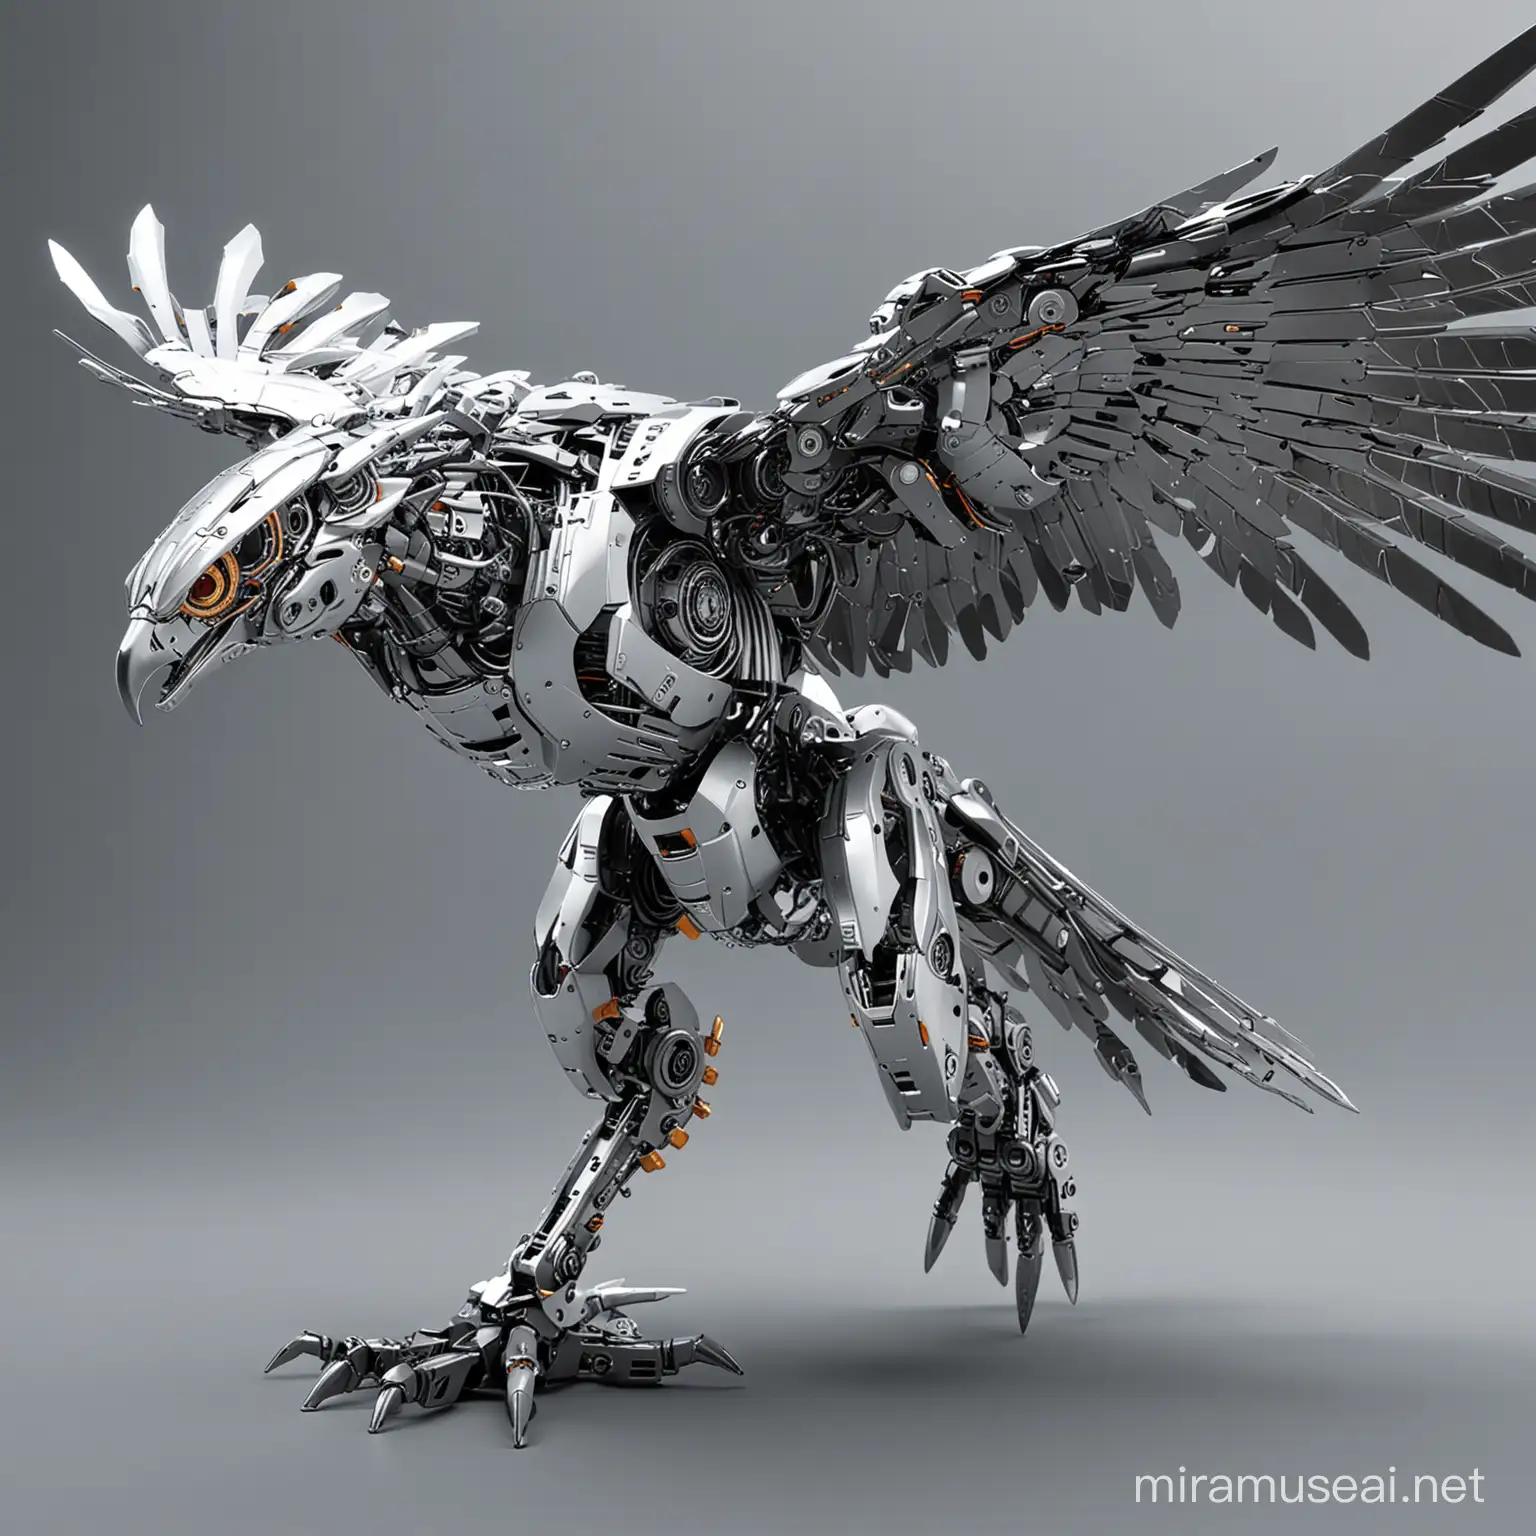 Metallic Cyber Hawk in Futuristic City Skyline